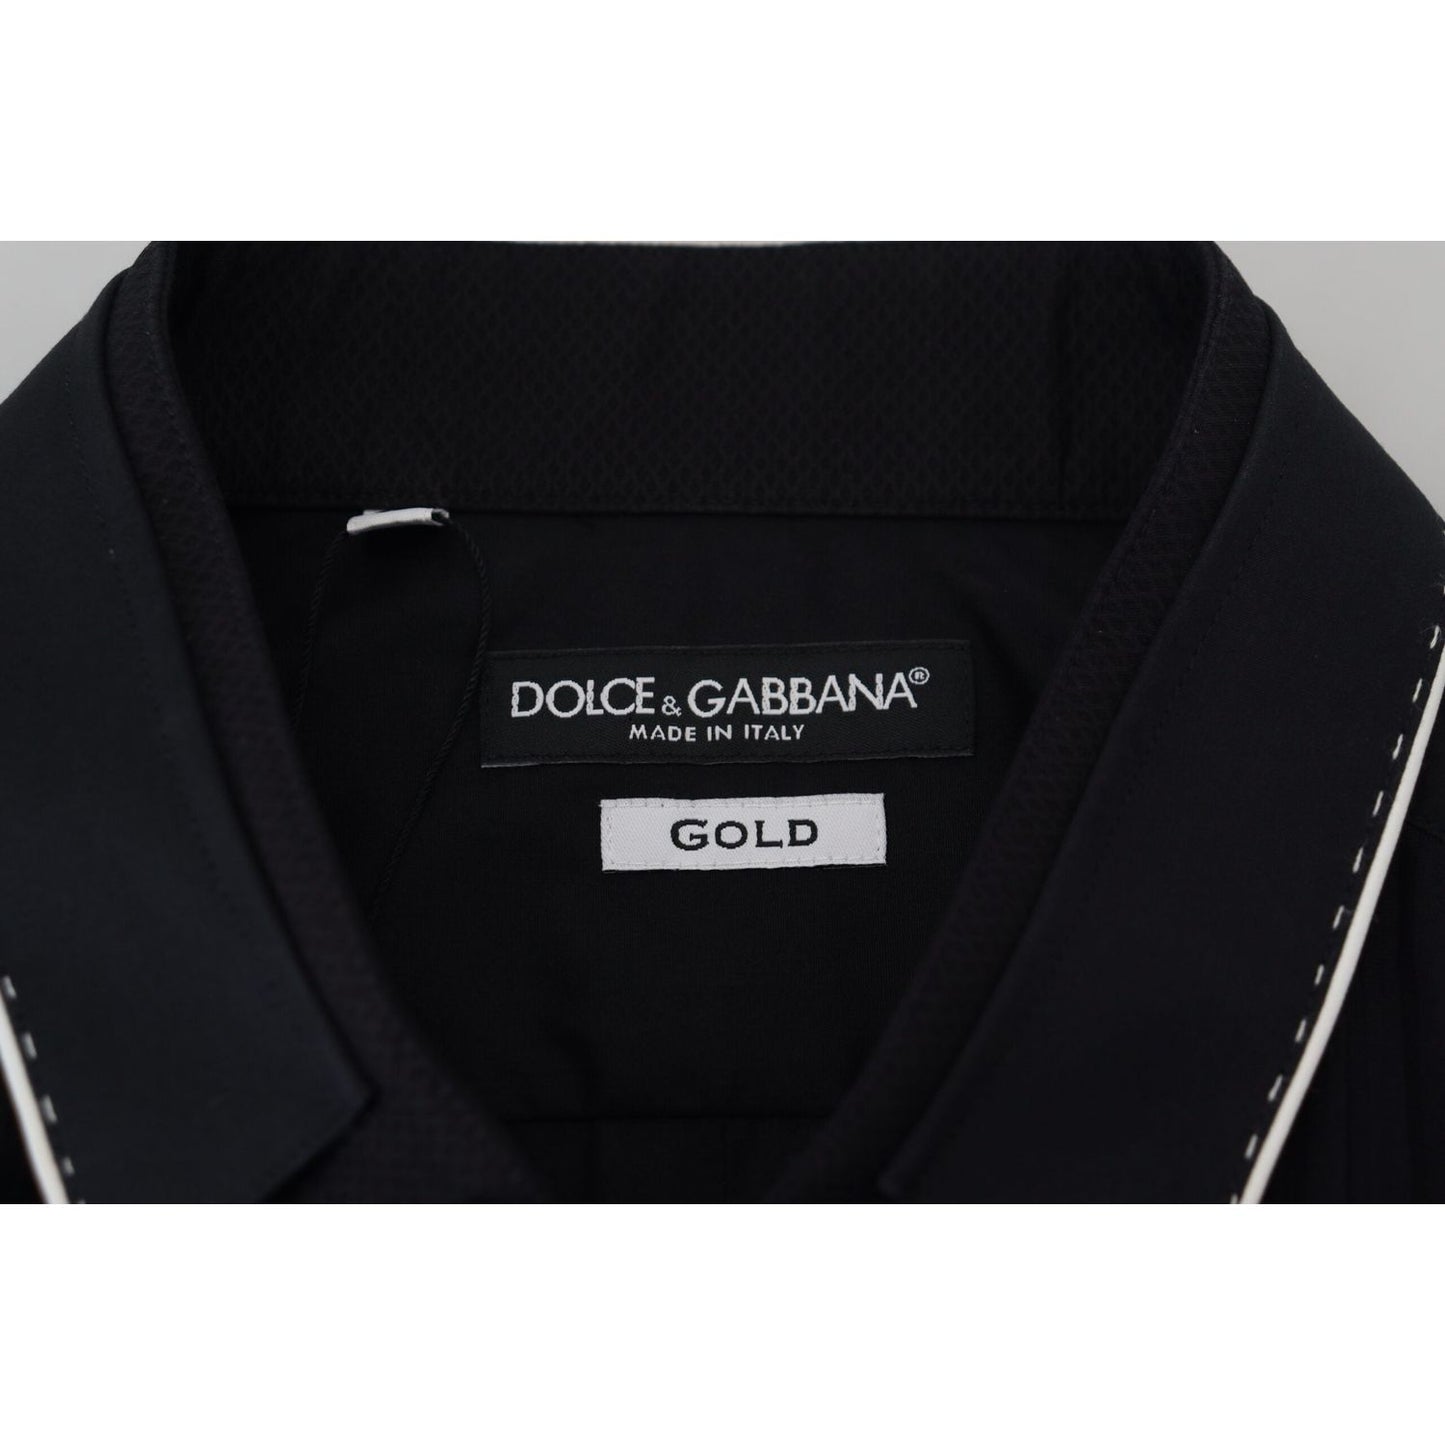 Dolce & Gabbana Elegant Slim Fit Tuxedo Dress Shirt gold-black-tuxedo-slim-fit-cotton-shirt